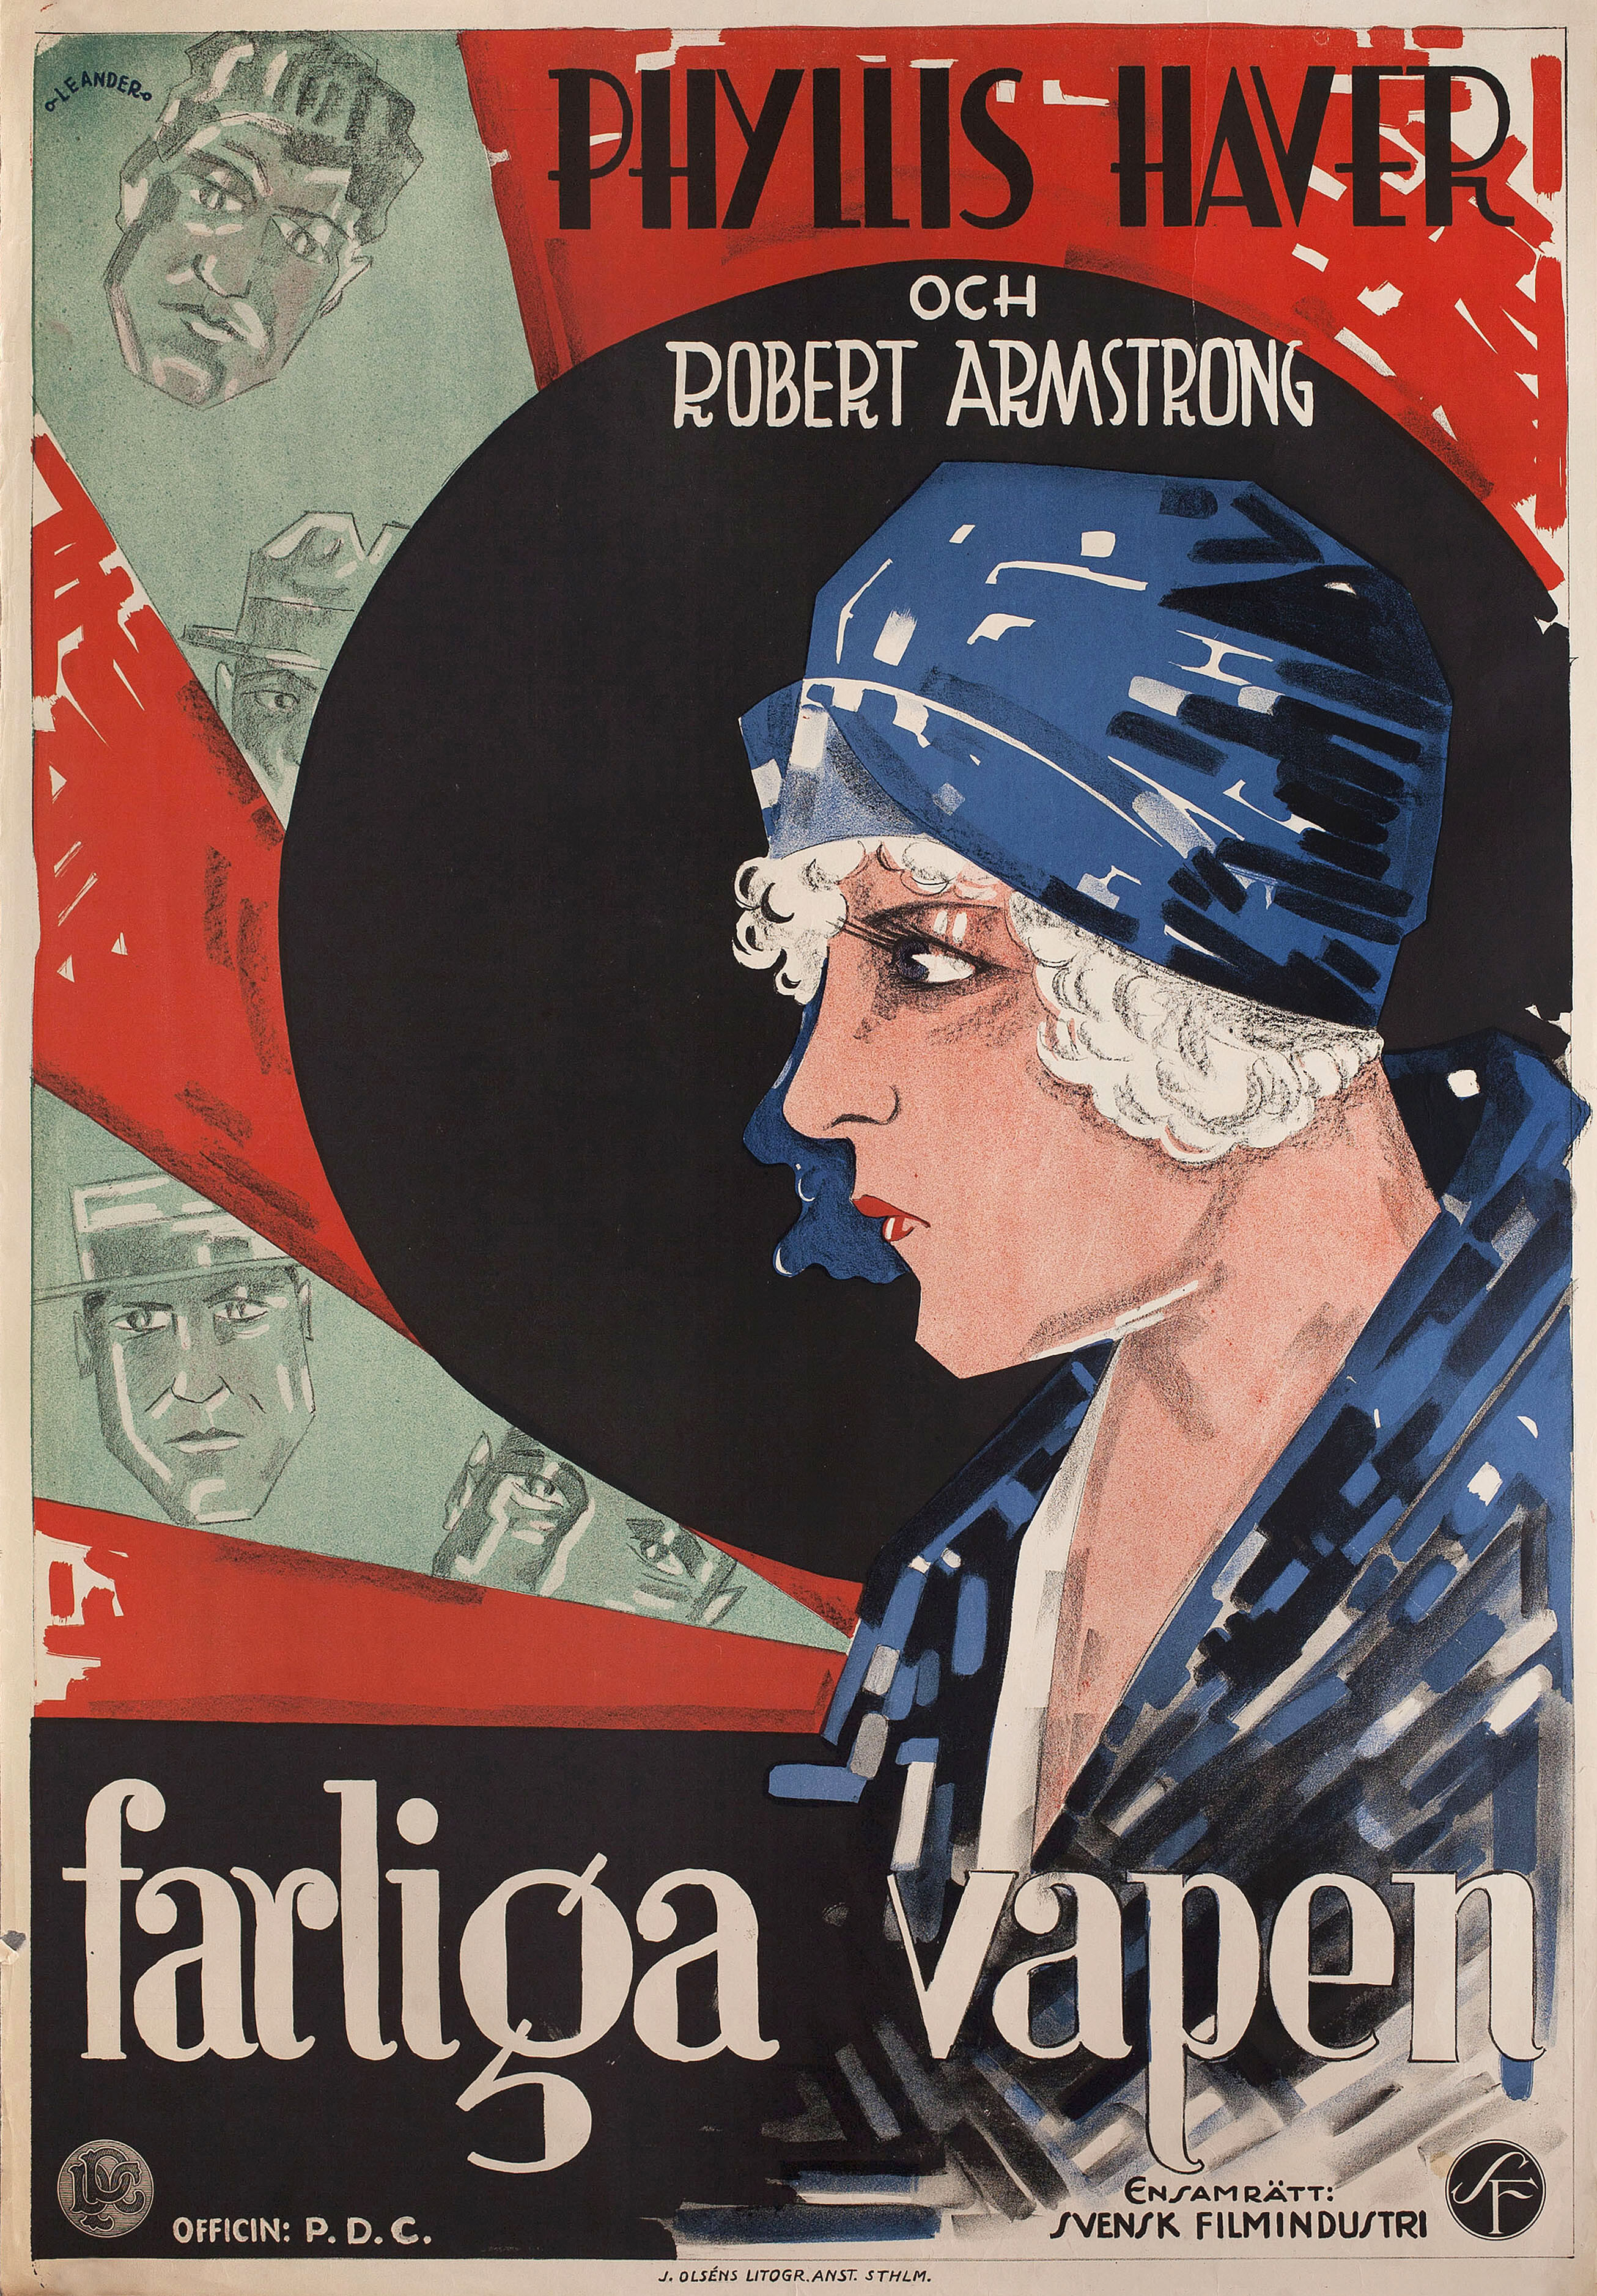 Загадочная леди (The Shady Lady, 1928), режиссёр Эдвард Х. Гриффит, постер к фильму в стиле ар-деко (Швеция, 1929 год), автор Леандер